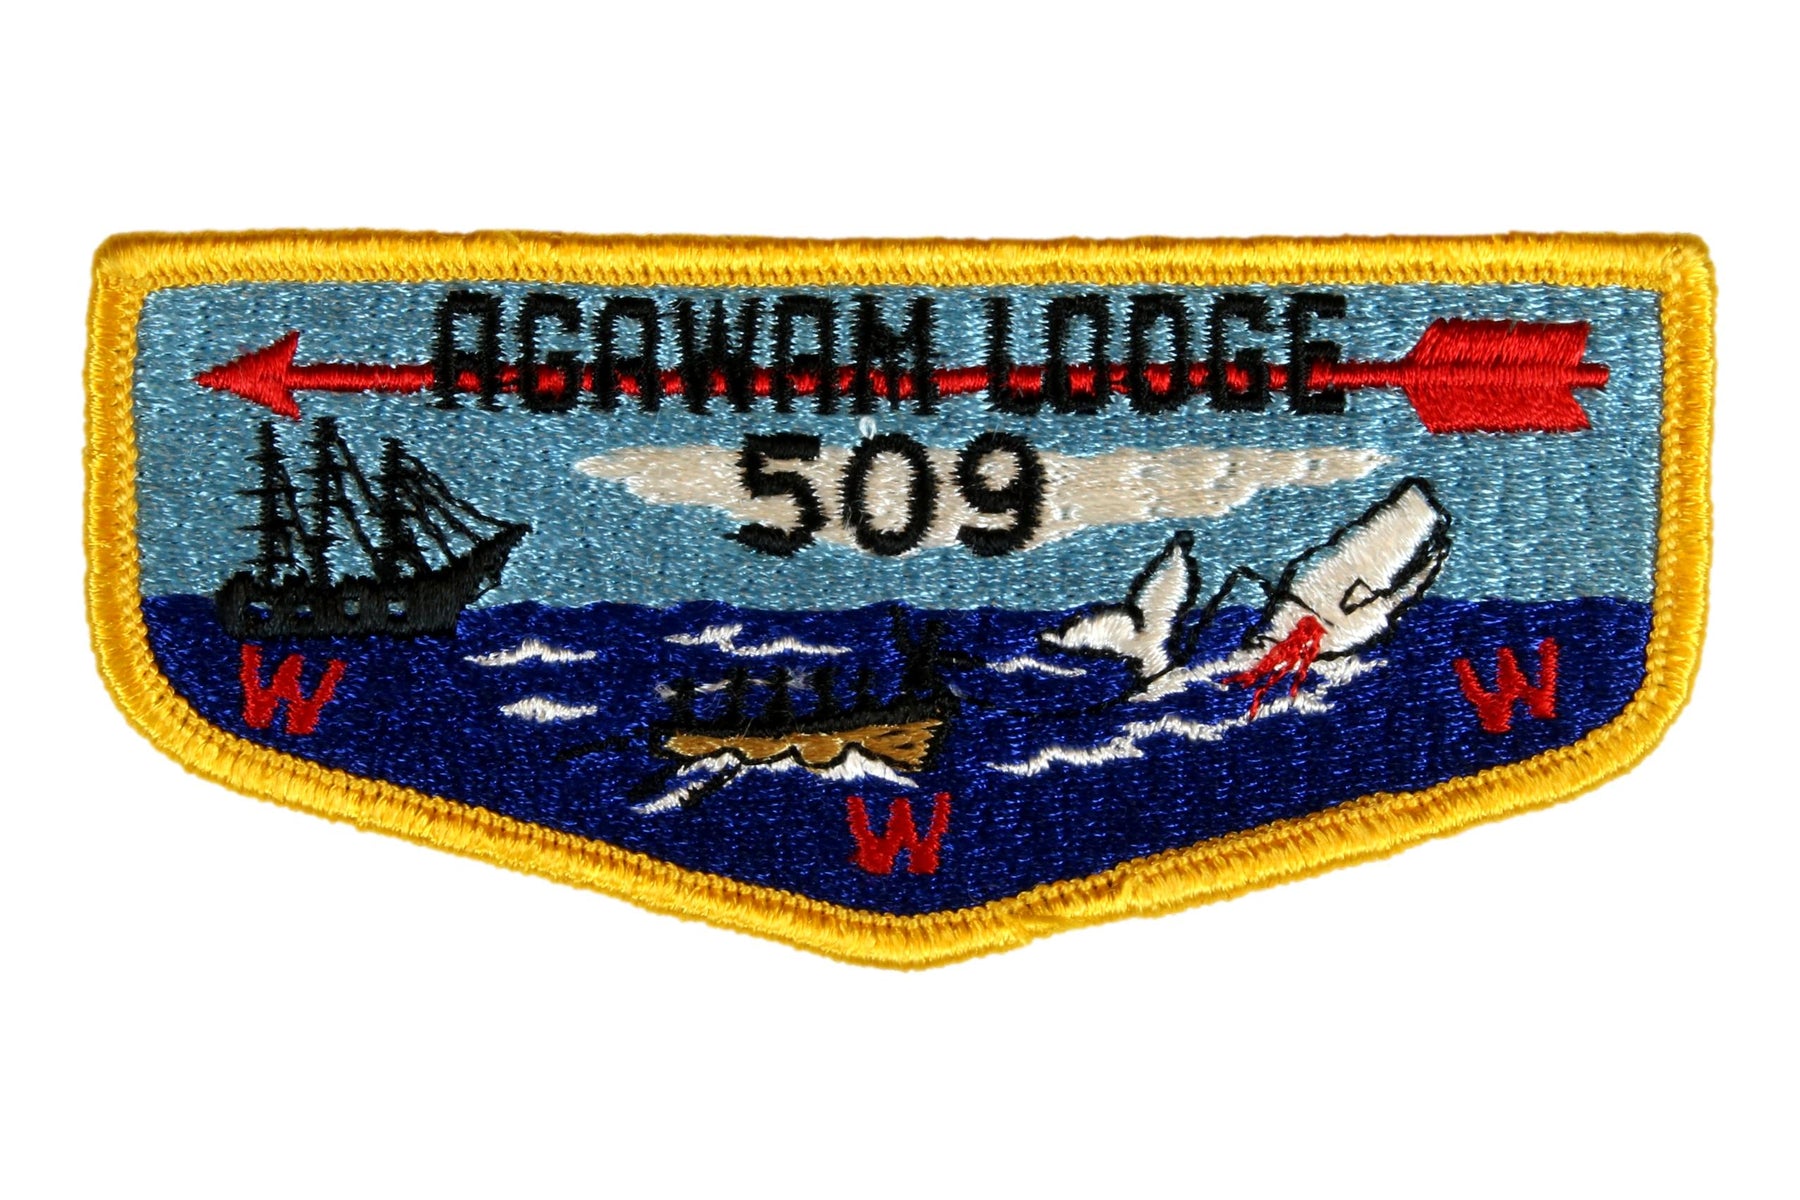 Lodge 509 Agawam Flap S-1